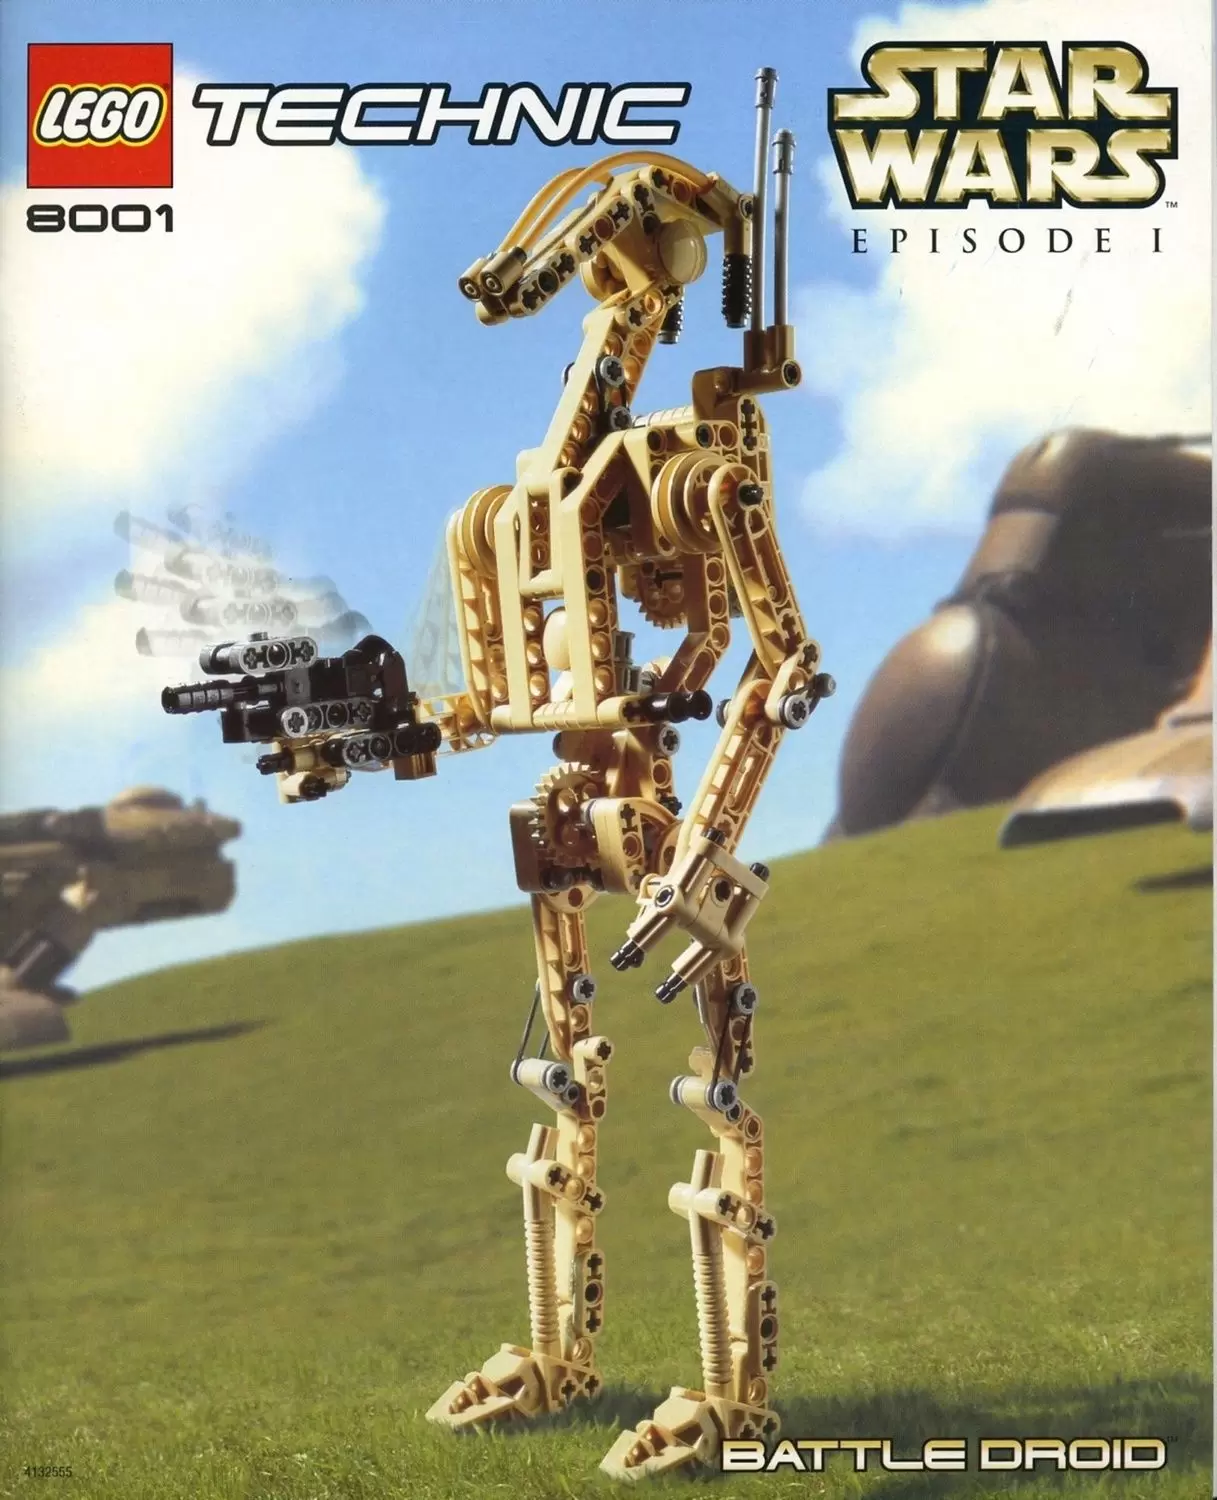 7681 Lego ® Star Wars ™ personaje Battle Droid comandante set 7670 